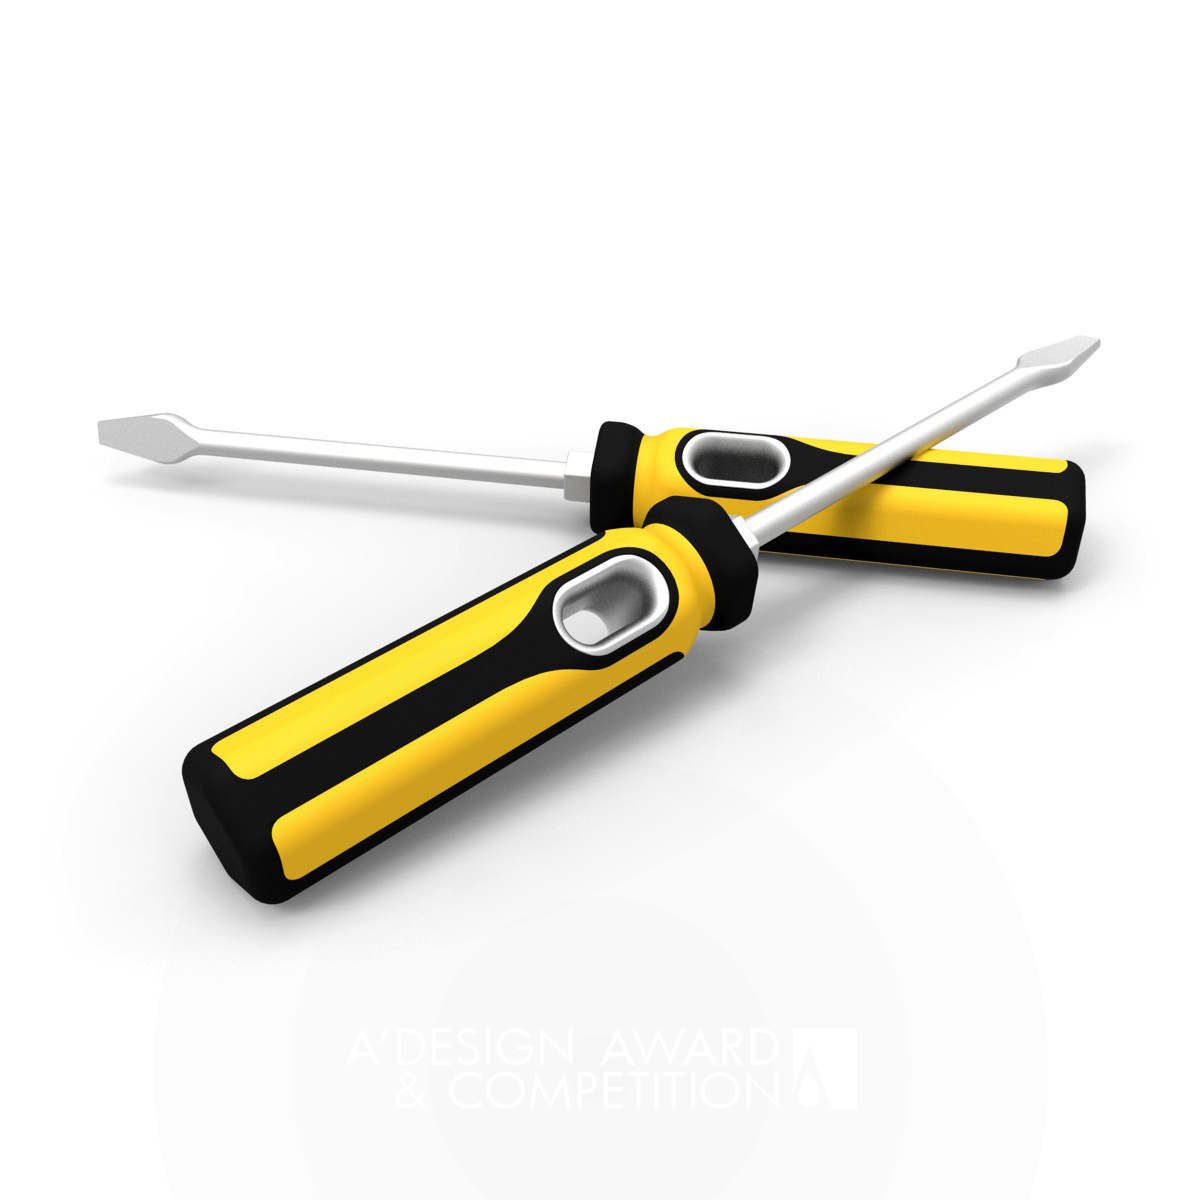 PLUS screwdriver Hand tools by Tong Wang